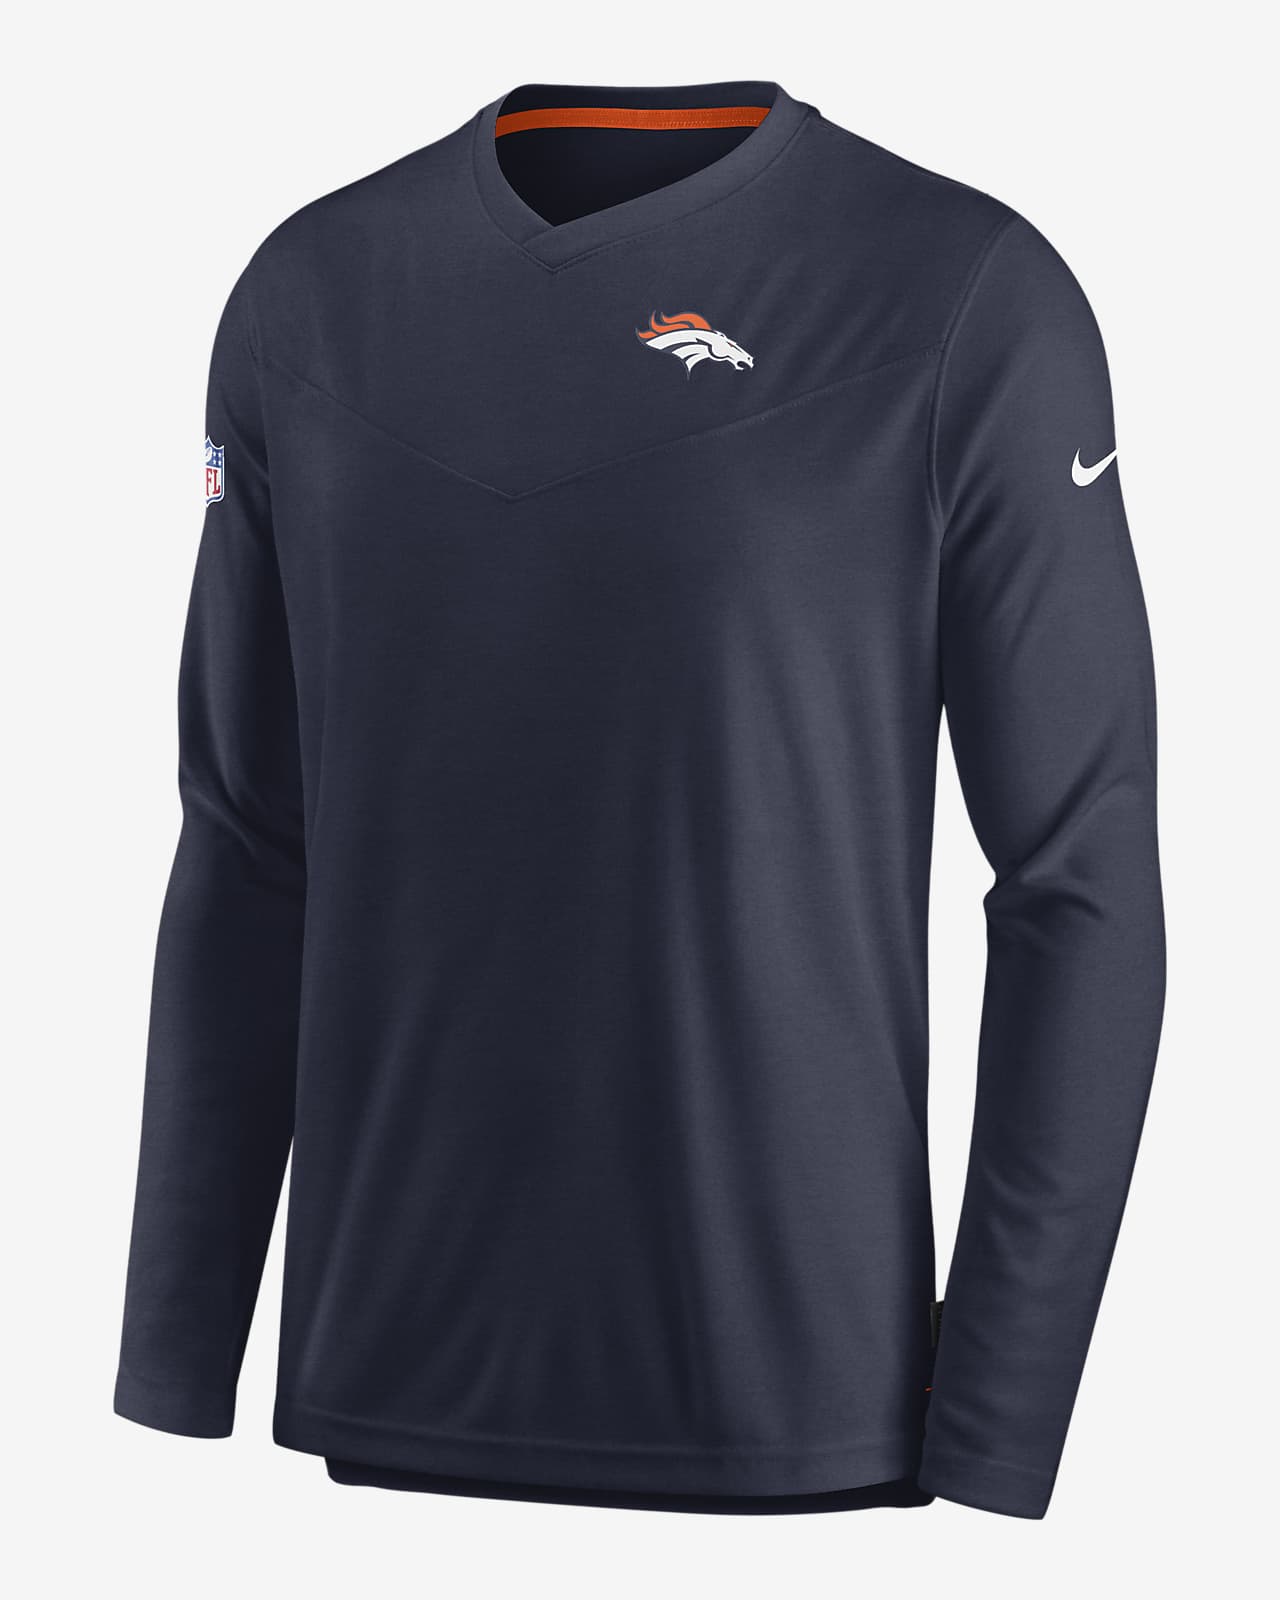 Nike Dri-FIT Lockup Coach UV (NFL Denver Broncos) Men's Long-Sleeve Top